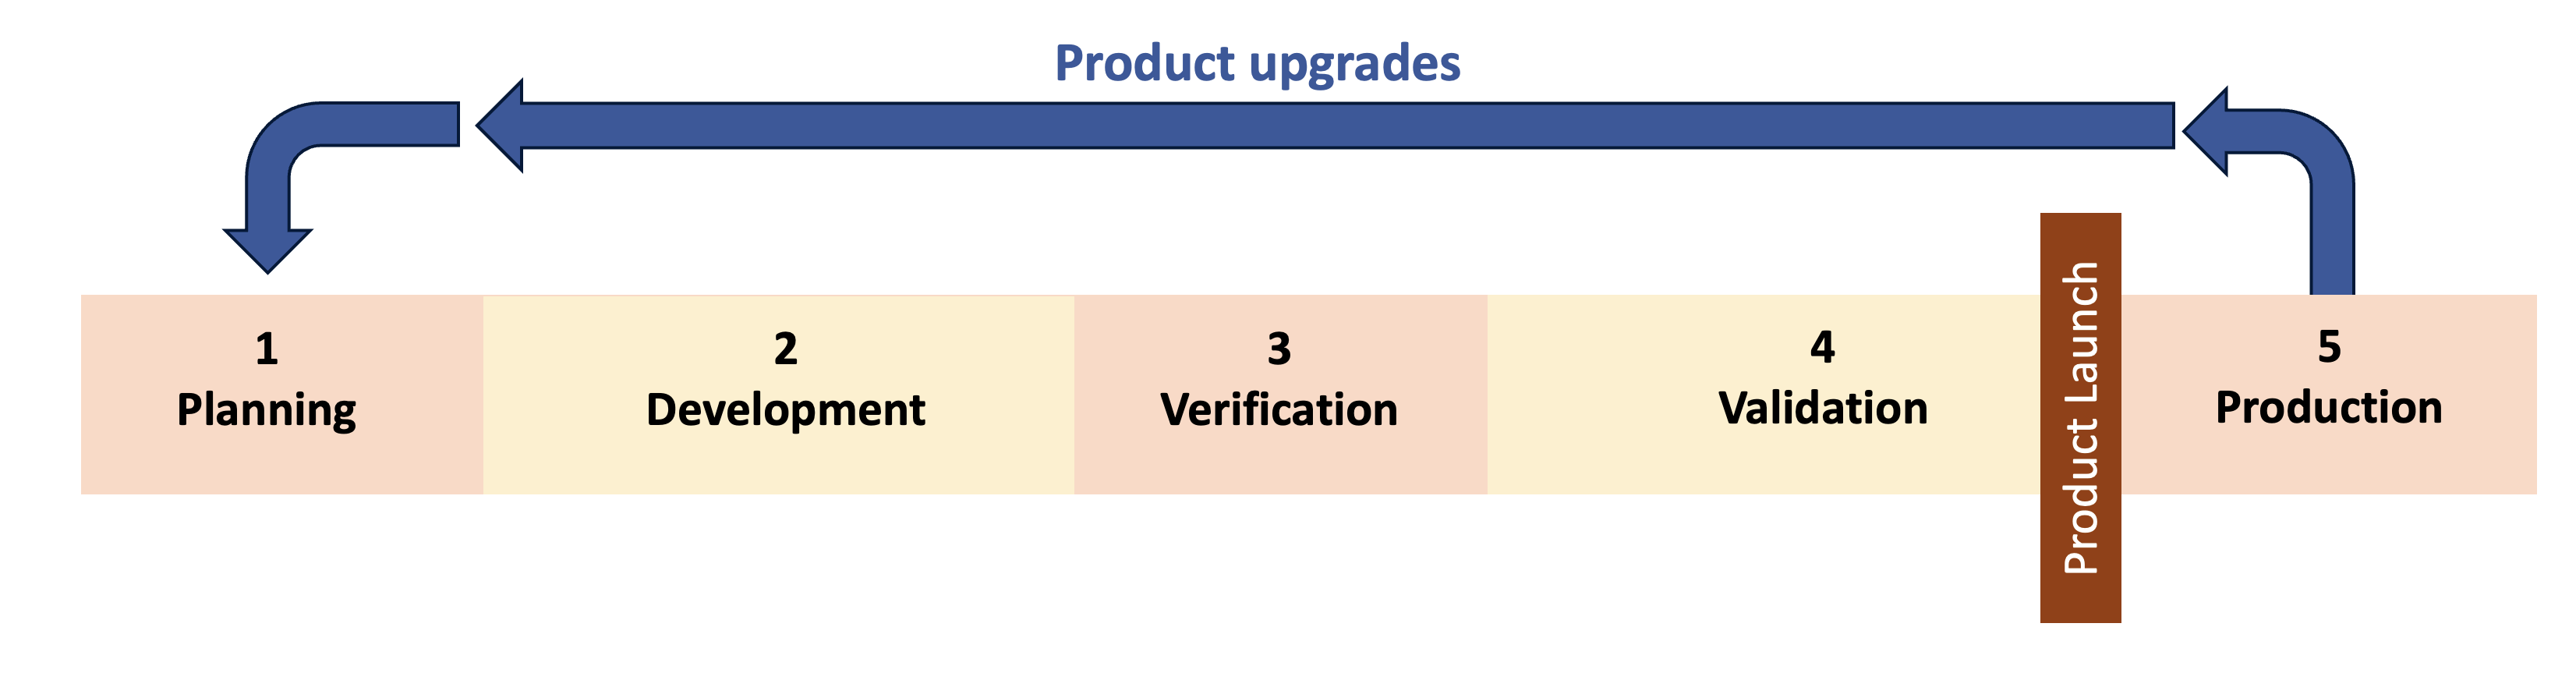 Returning from Phase 5 back to Phase 1 to manage product upgrades